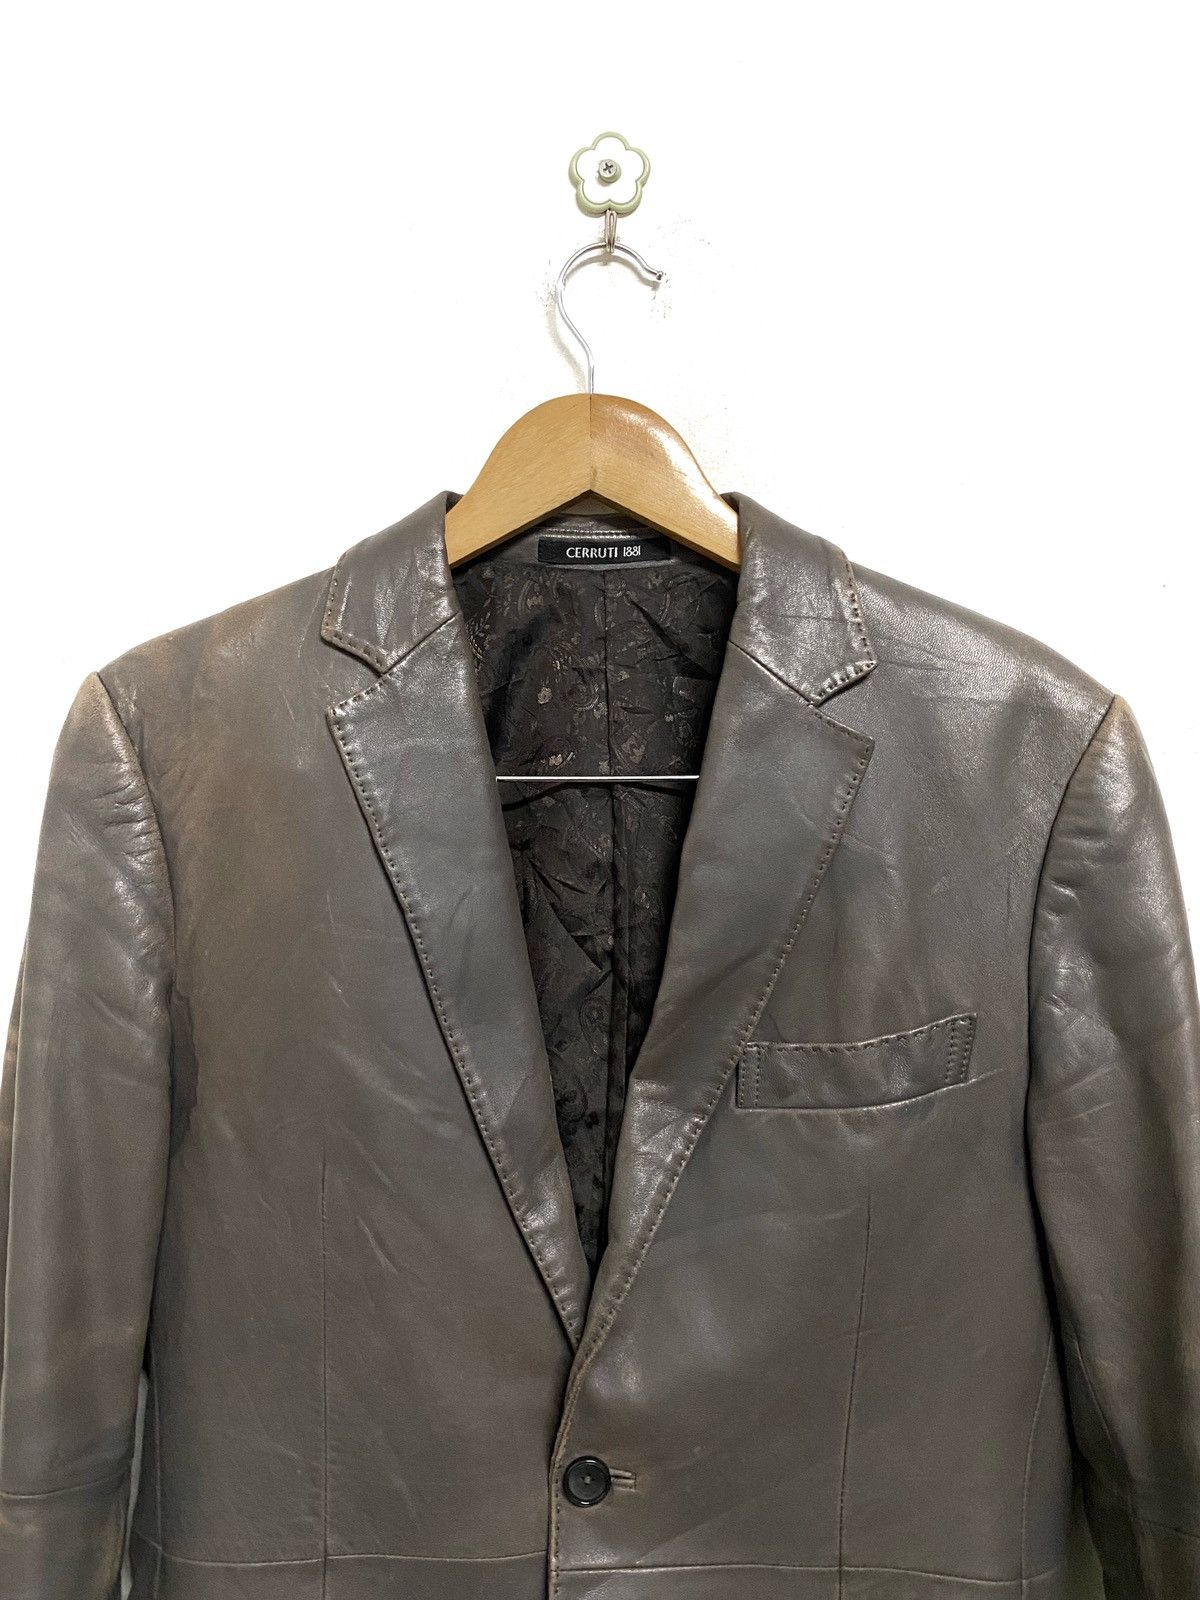 Cerruti 1881 Lambskin Leather Jacket - 2